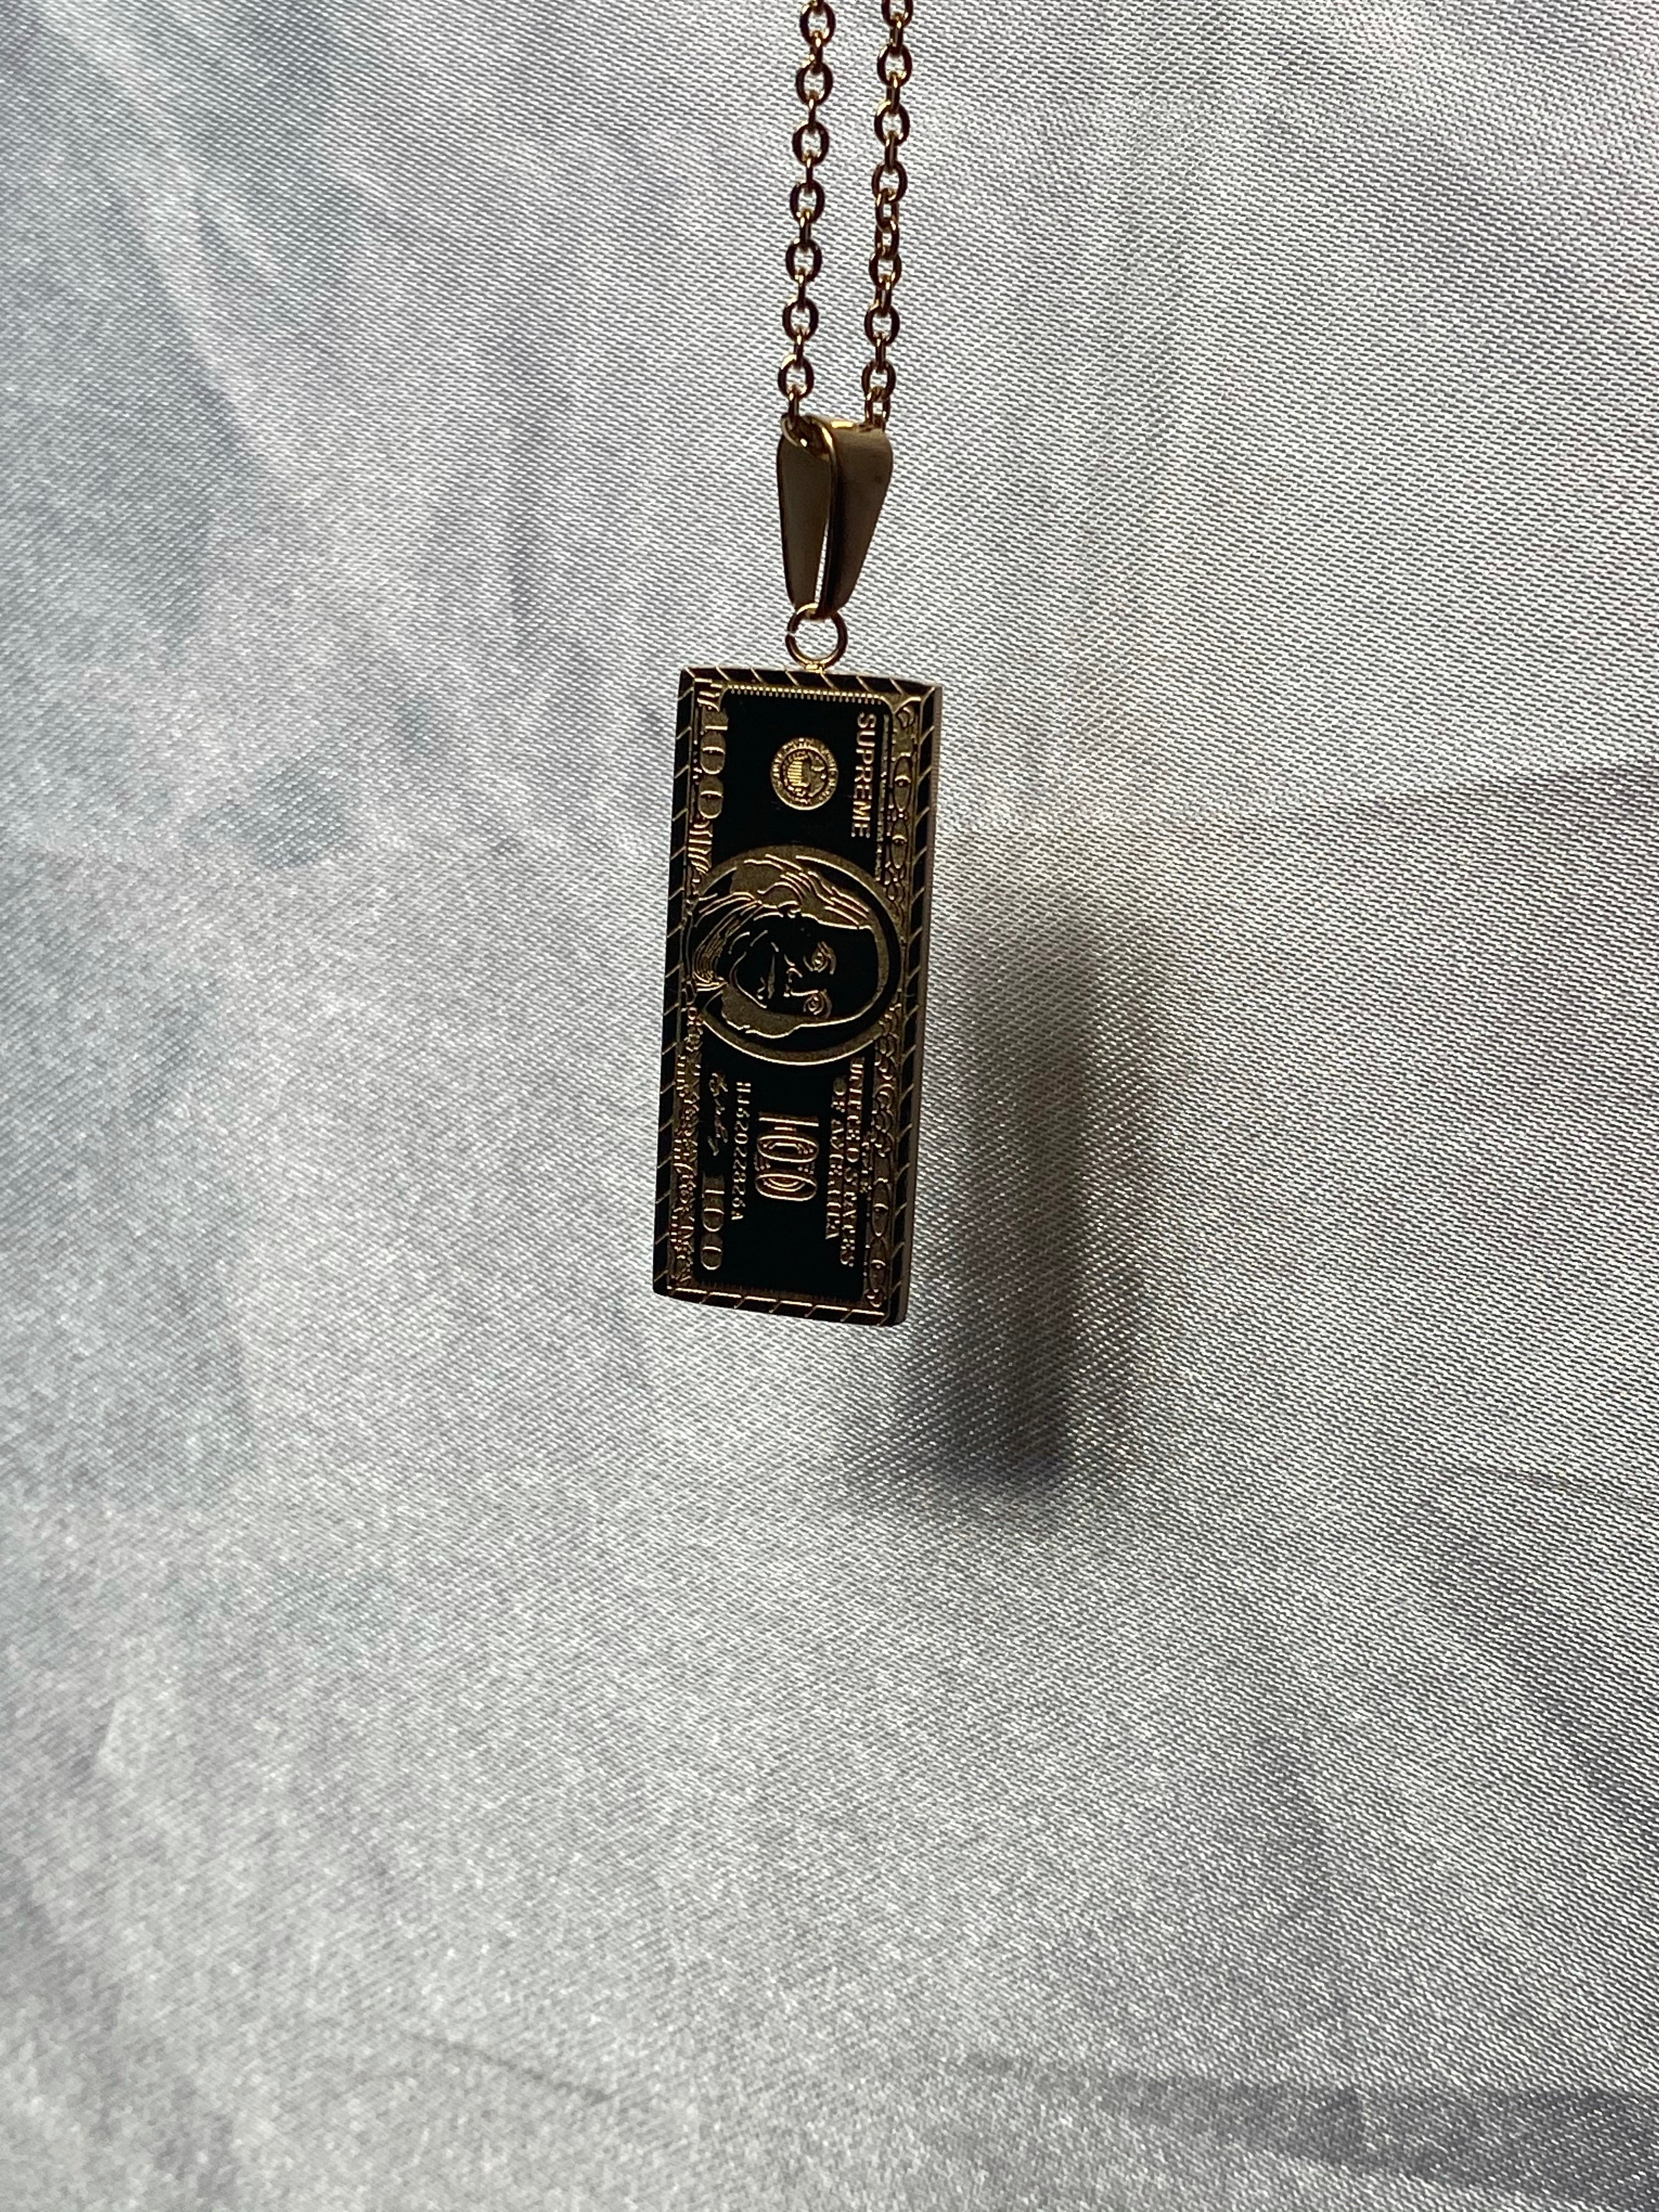 $100 pendant on box chain